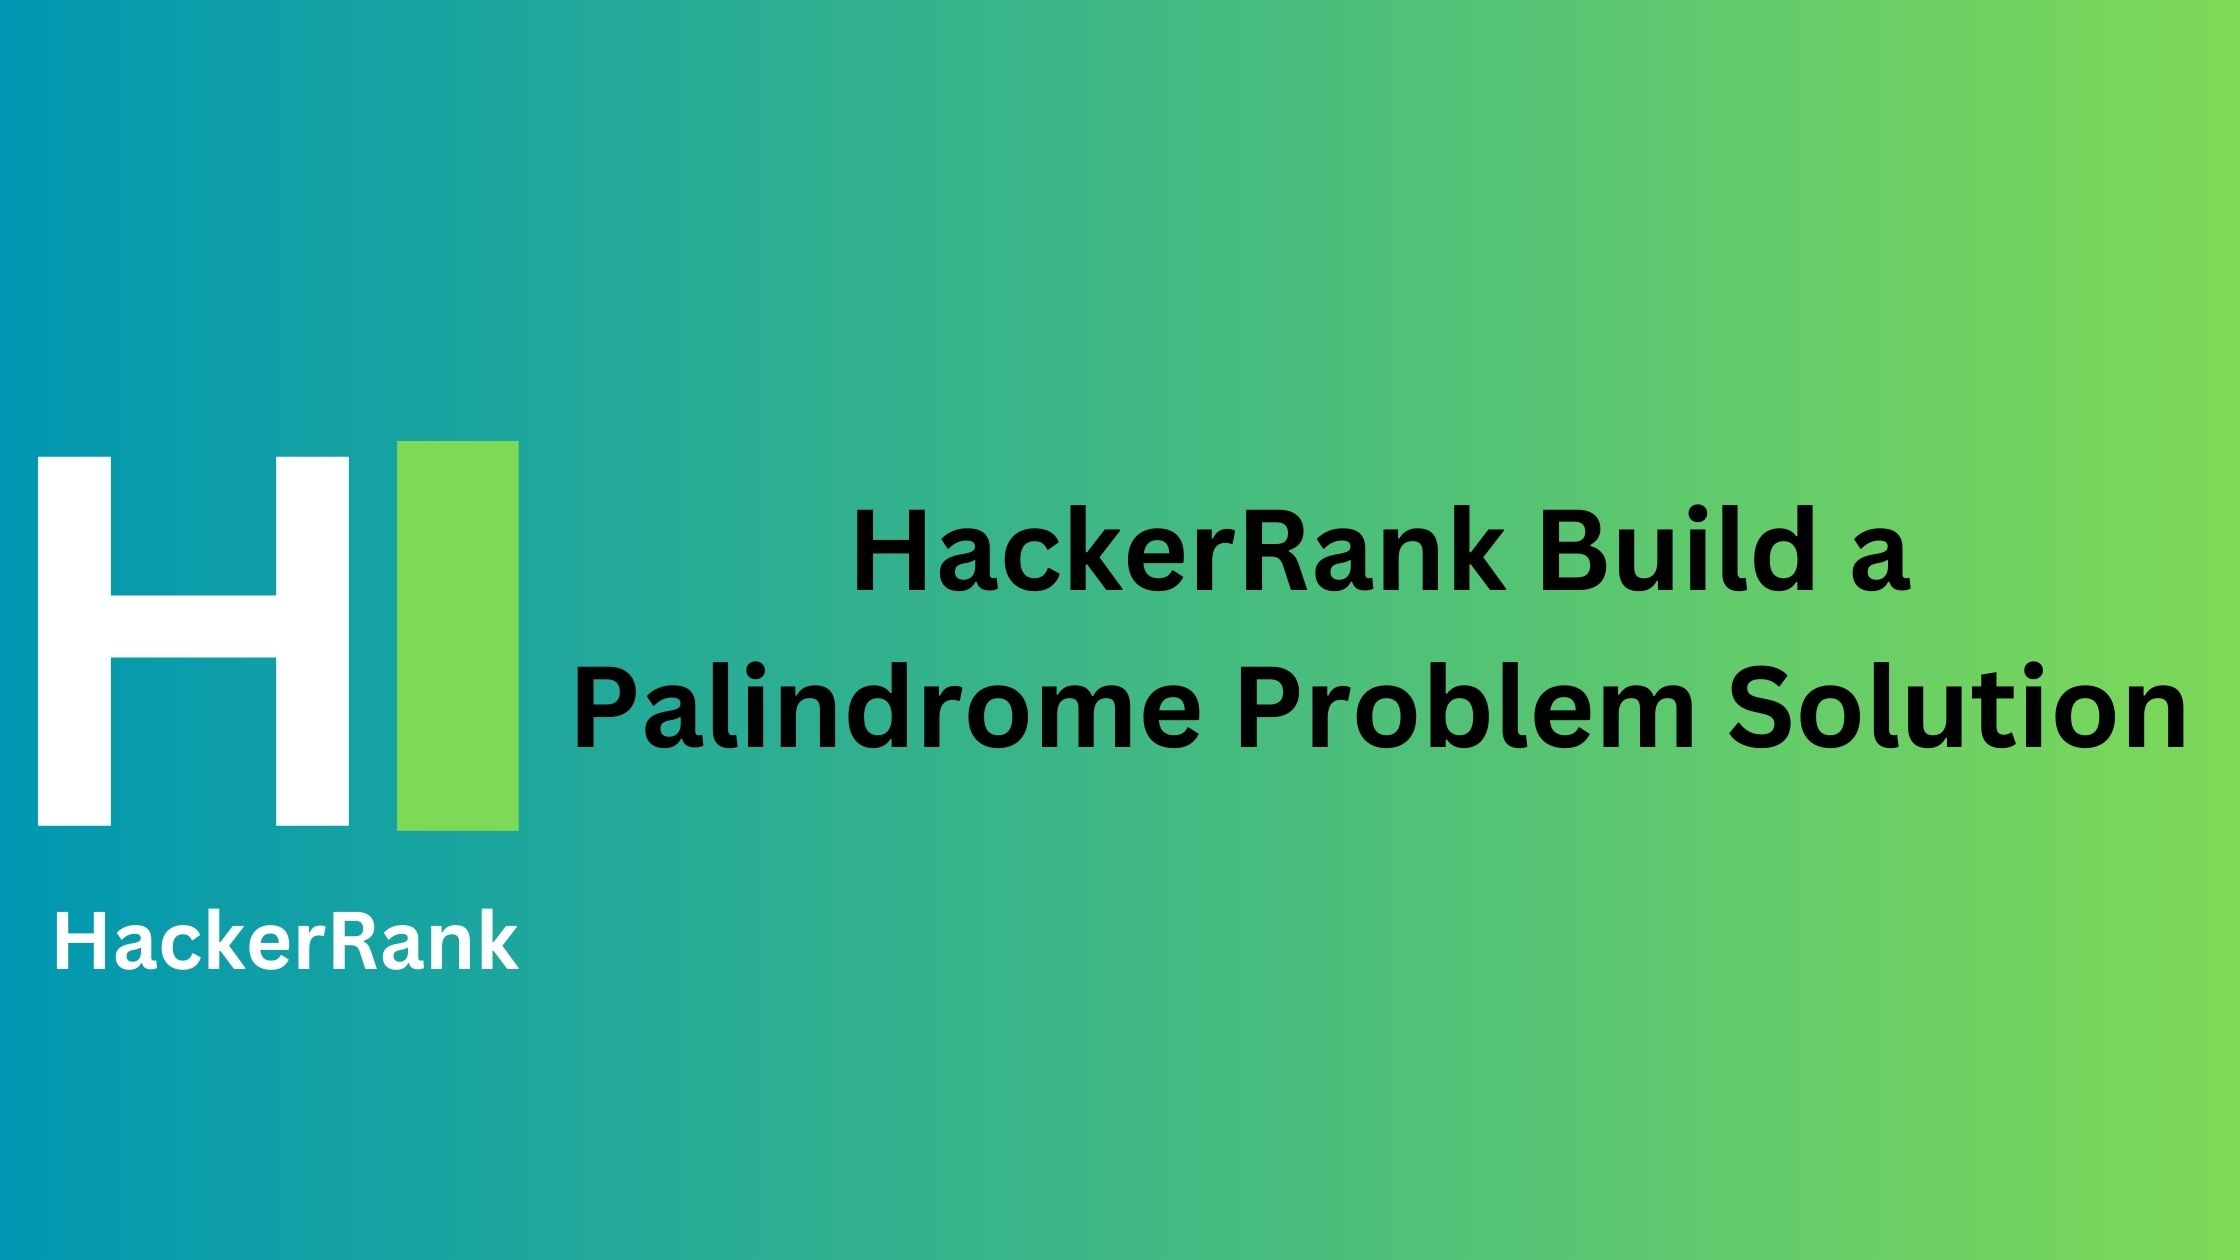 HackerRank Build a Palindrome Problem Solution